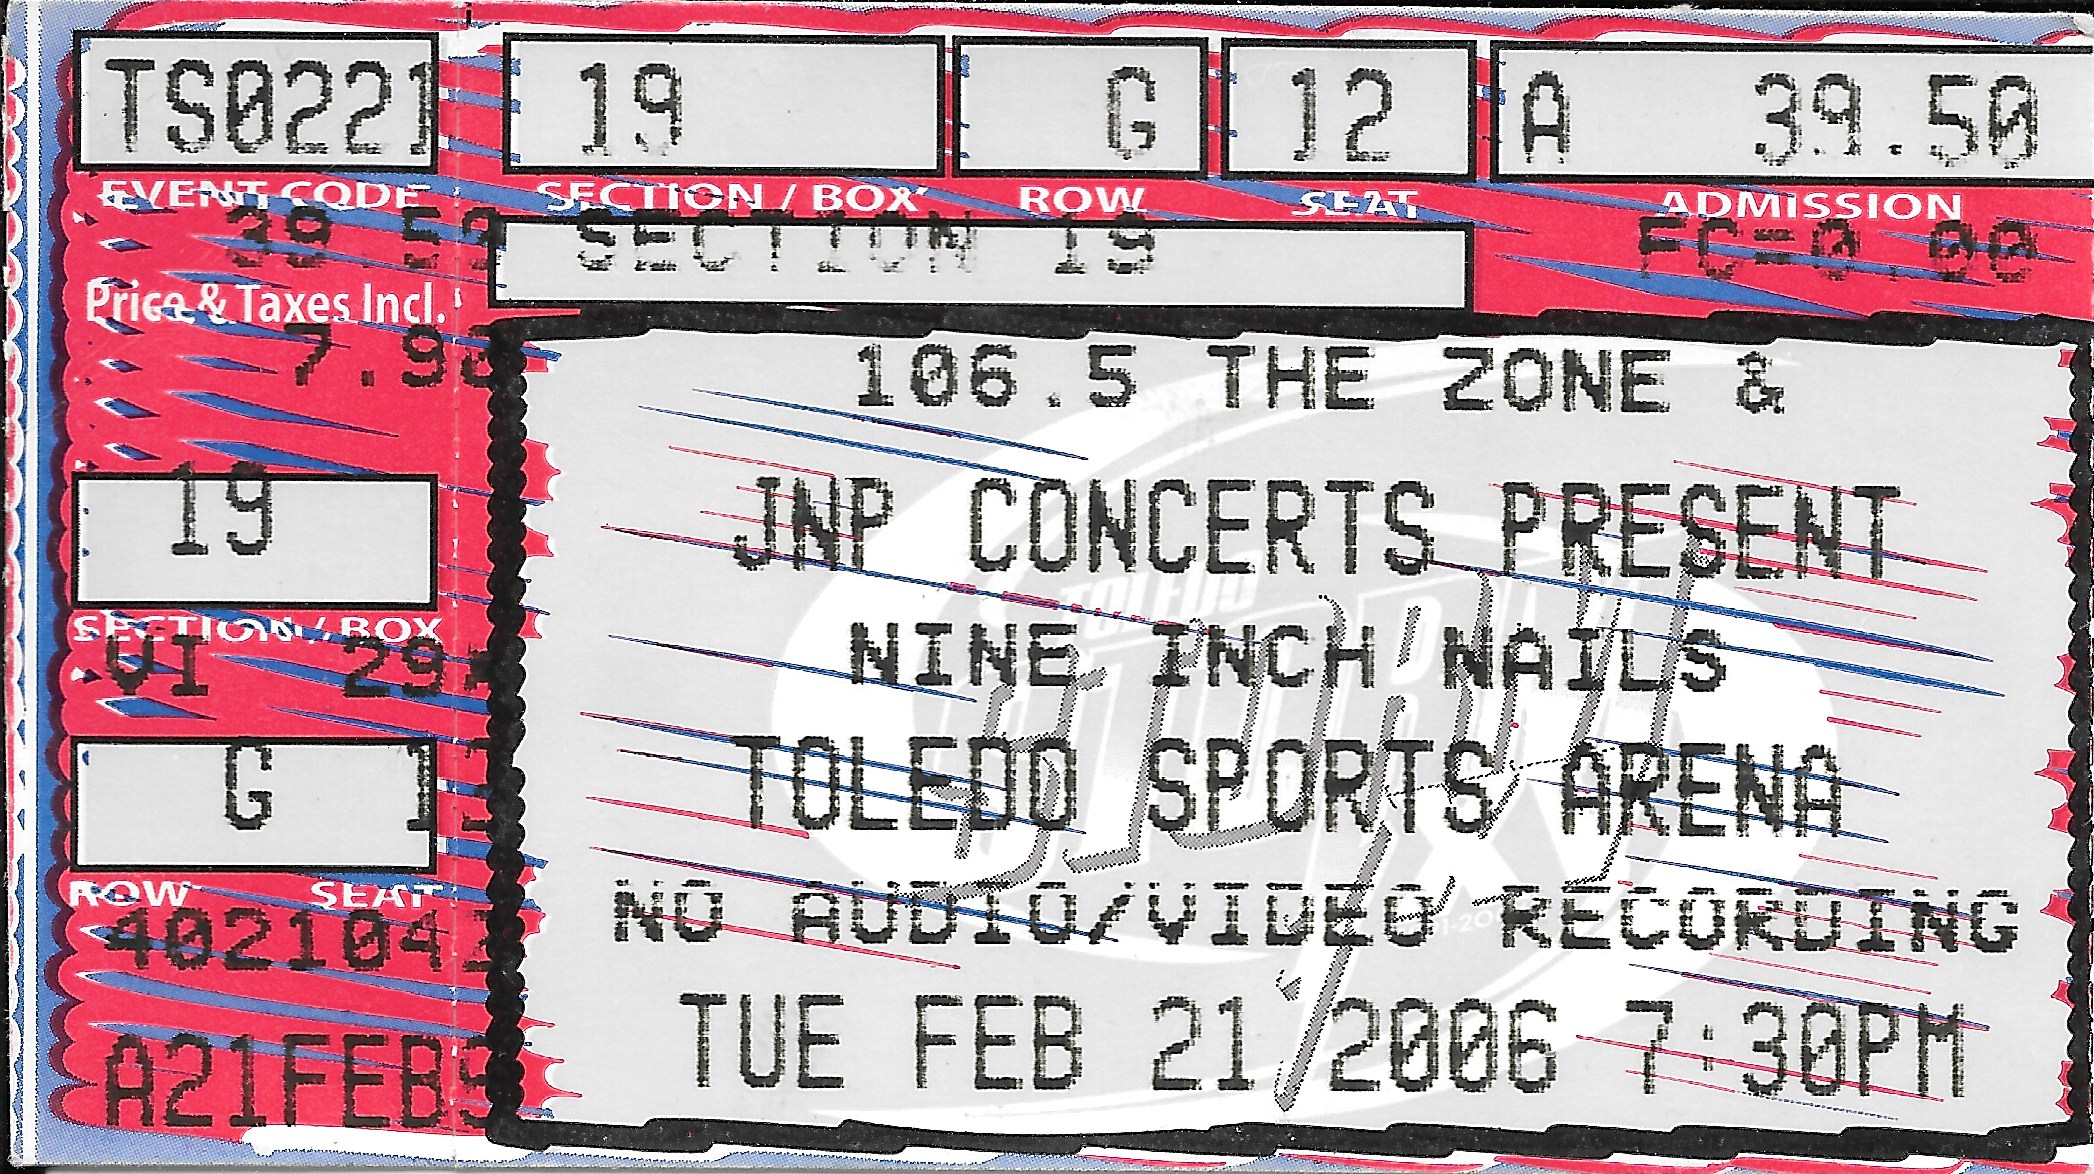 2006/02/21 Ticket